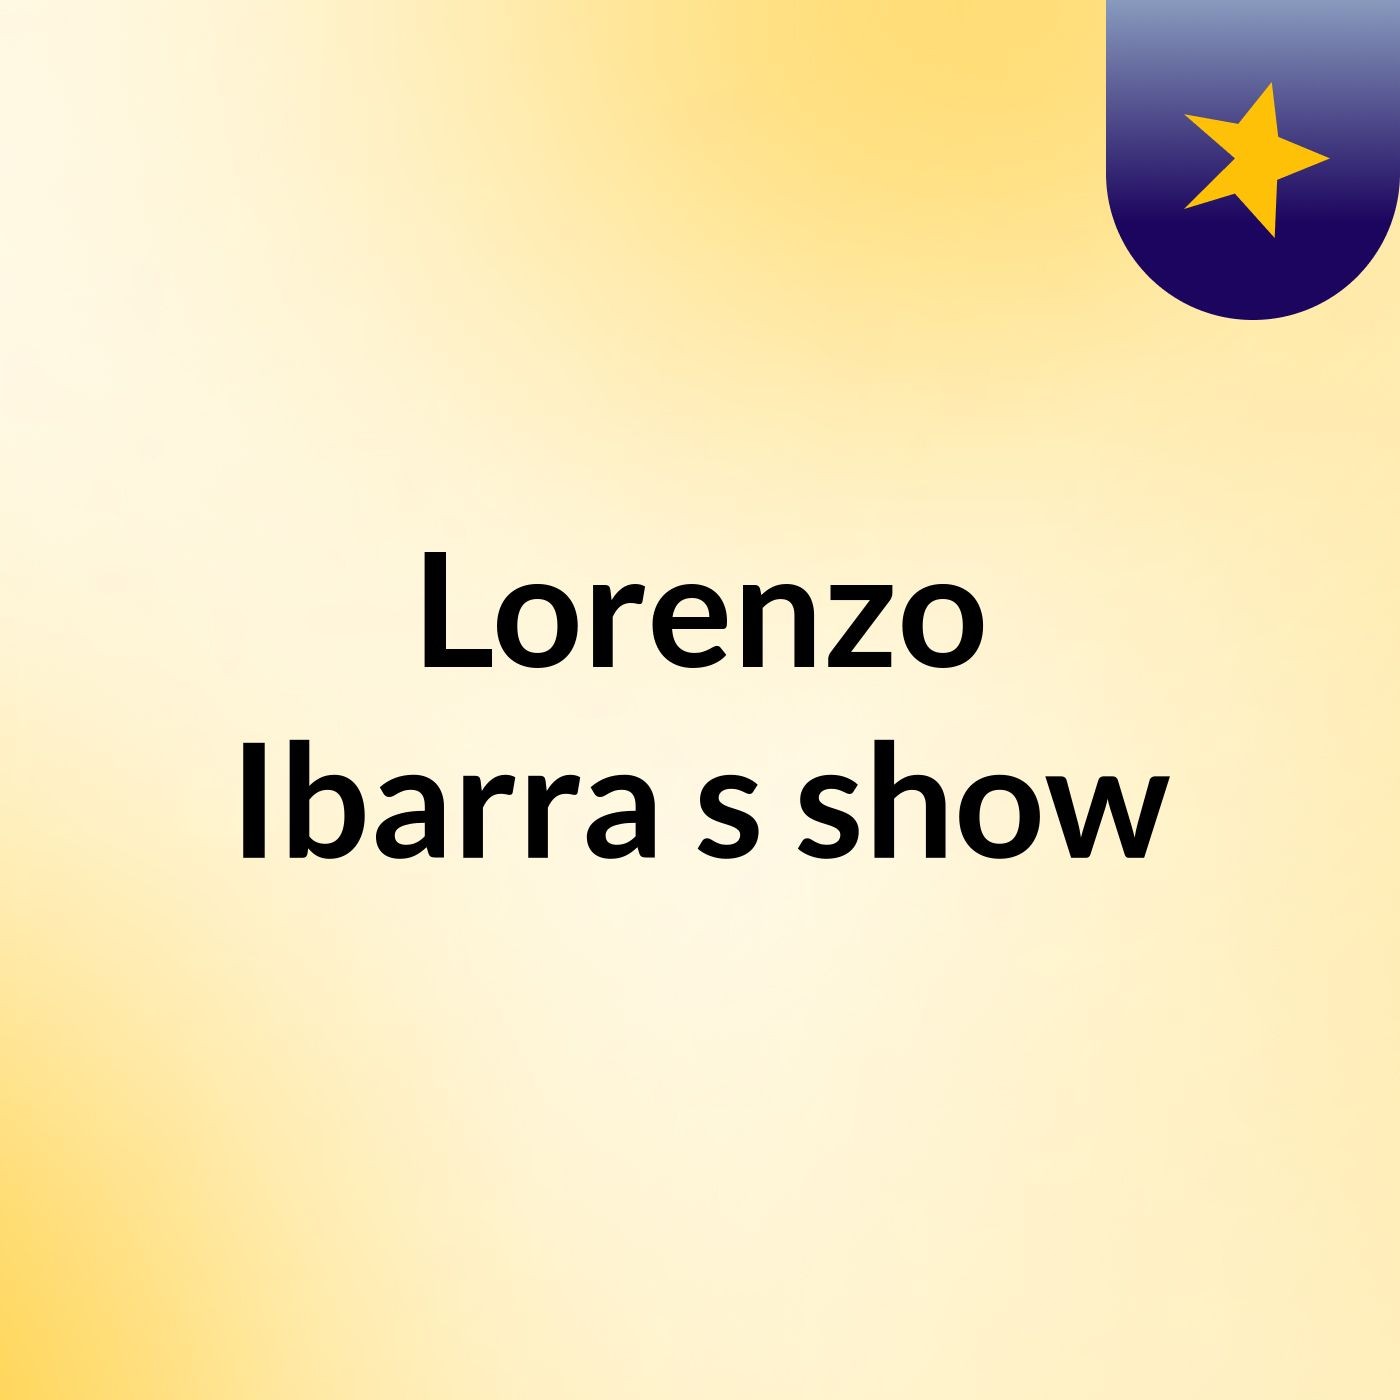 Lorenzo Ibarra's show